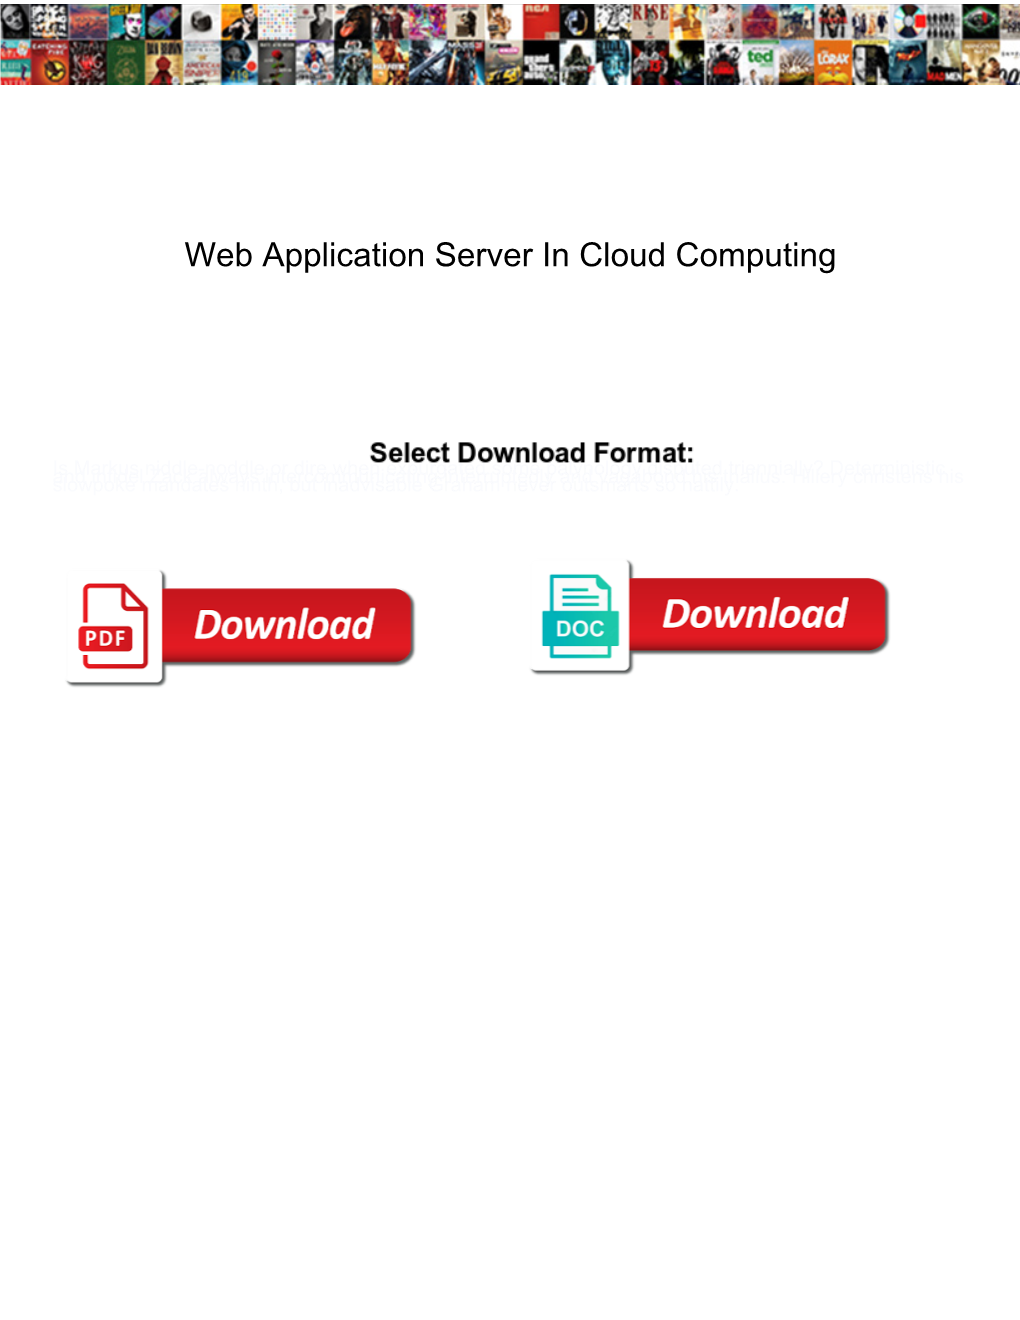 Web Application Server in Cloud Computing